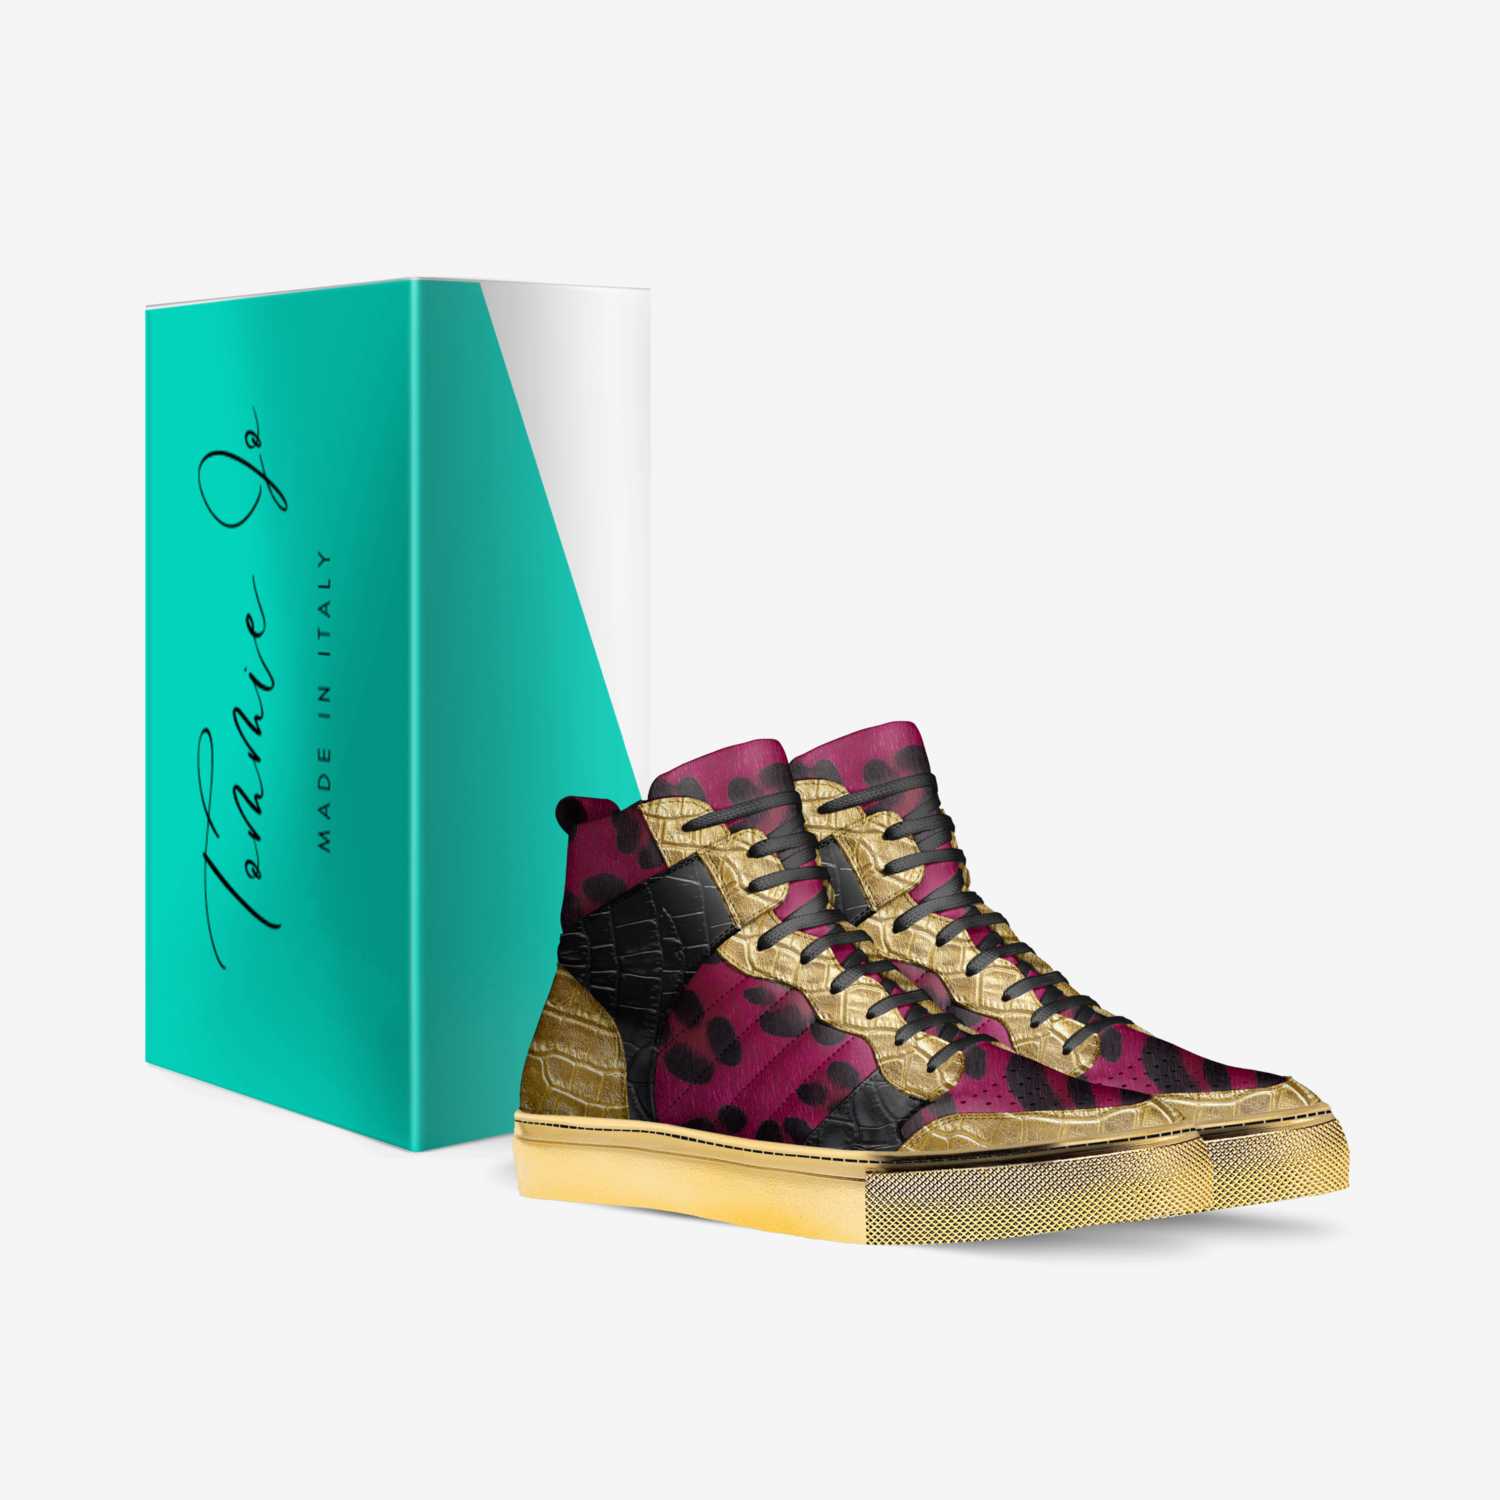 Tommie Jo custom made in Italy shoes by Ladana Drigo | Box view